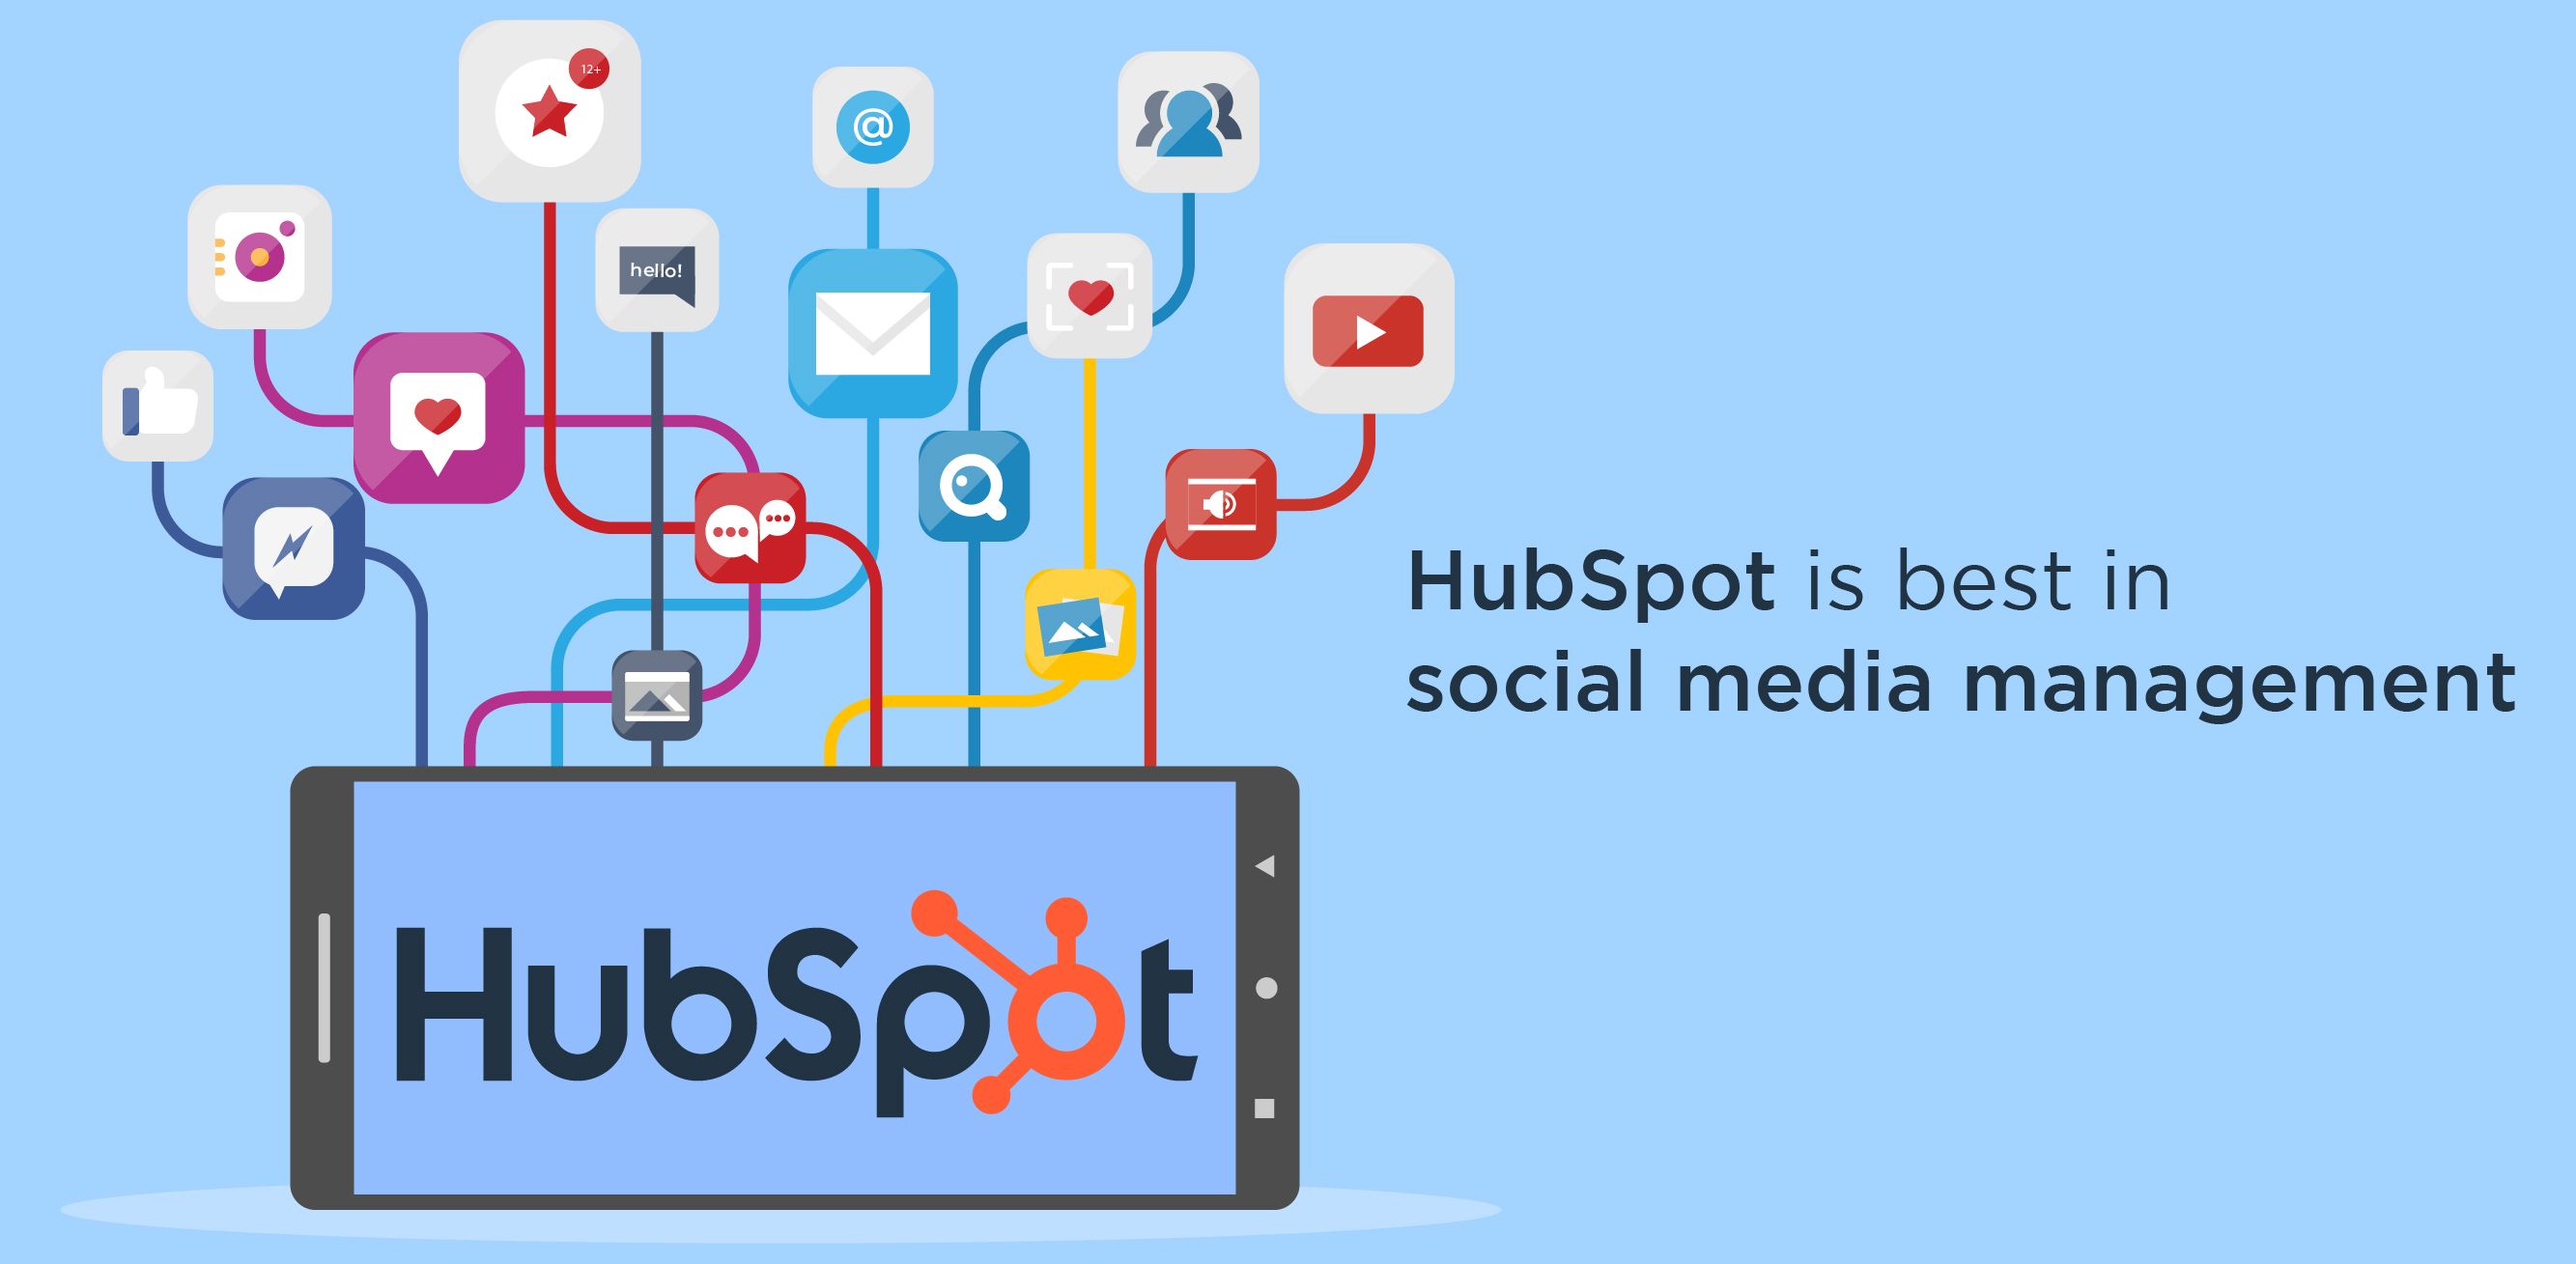 HubSpot is best in social media management